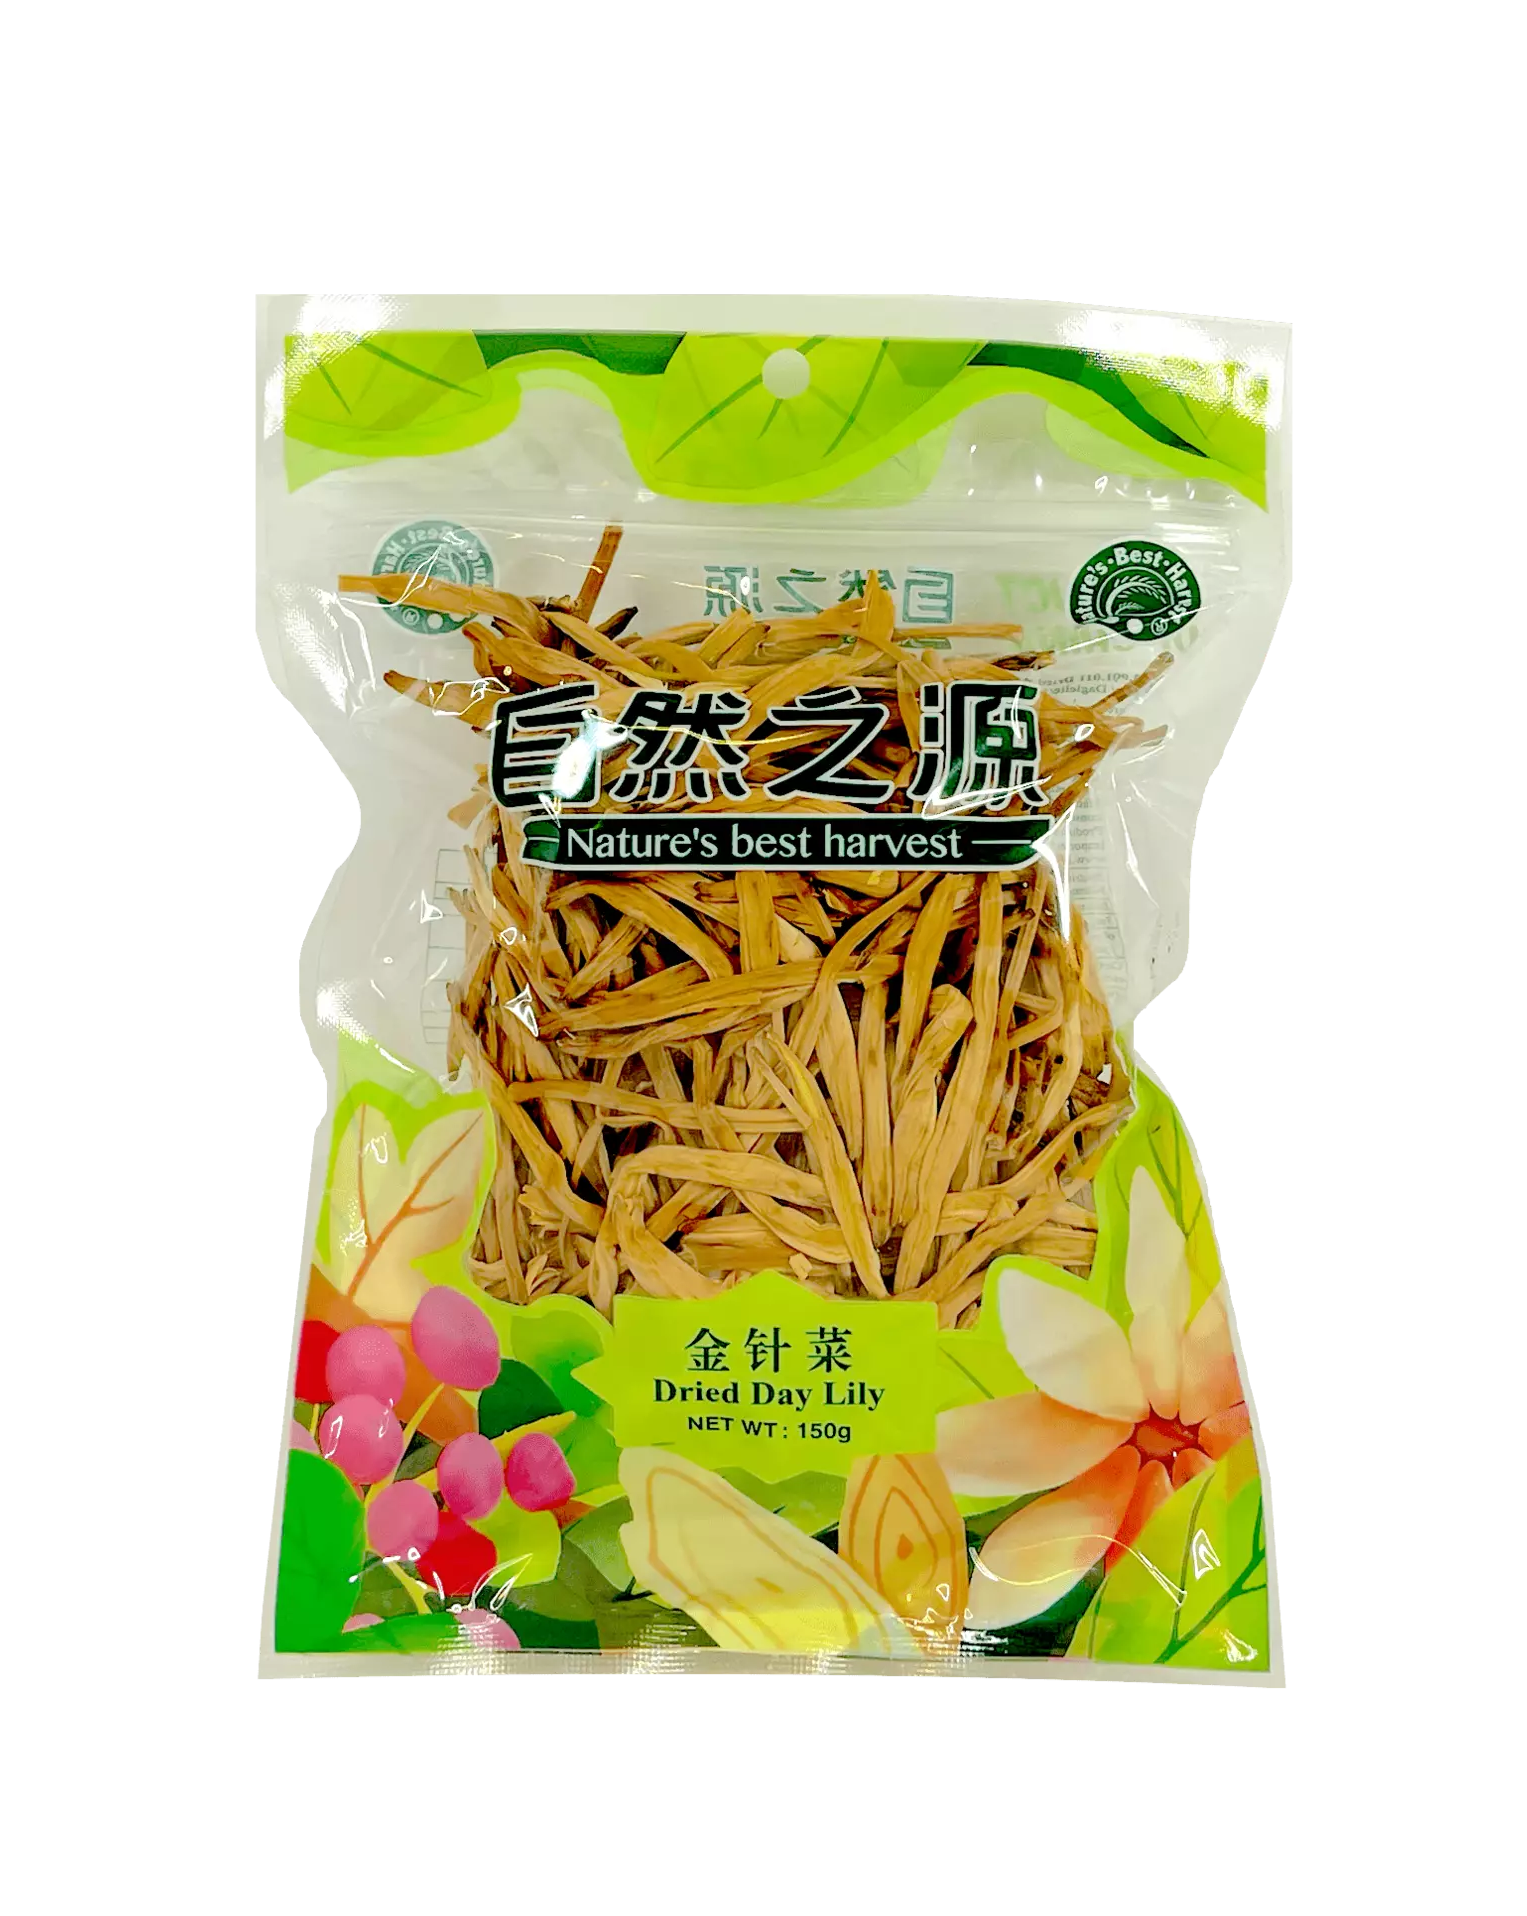 Herb Daylily Dried 100g Huang Hua Cai NBH